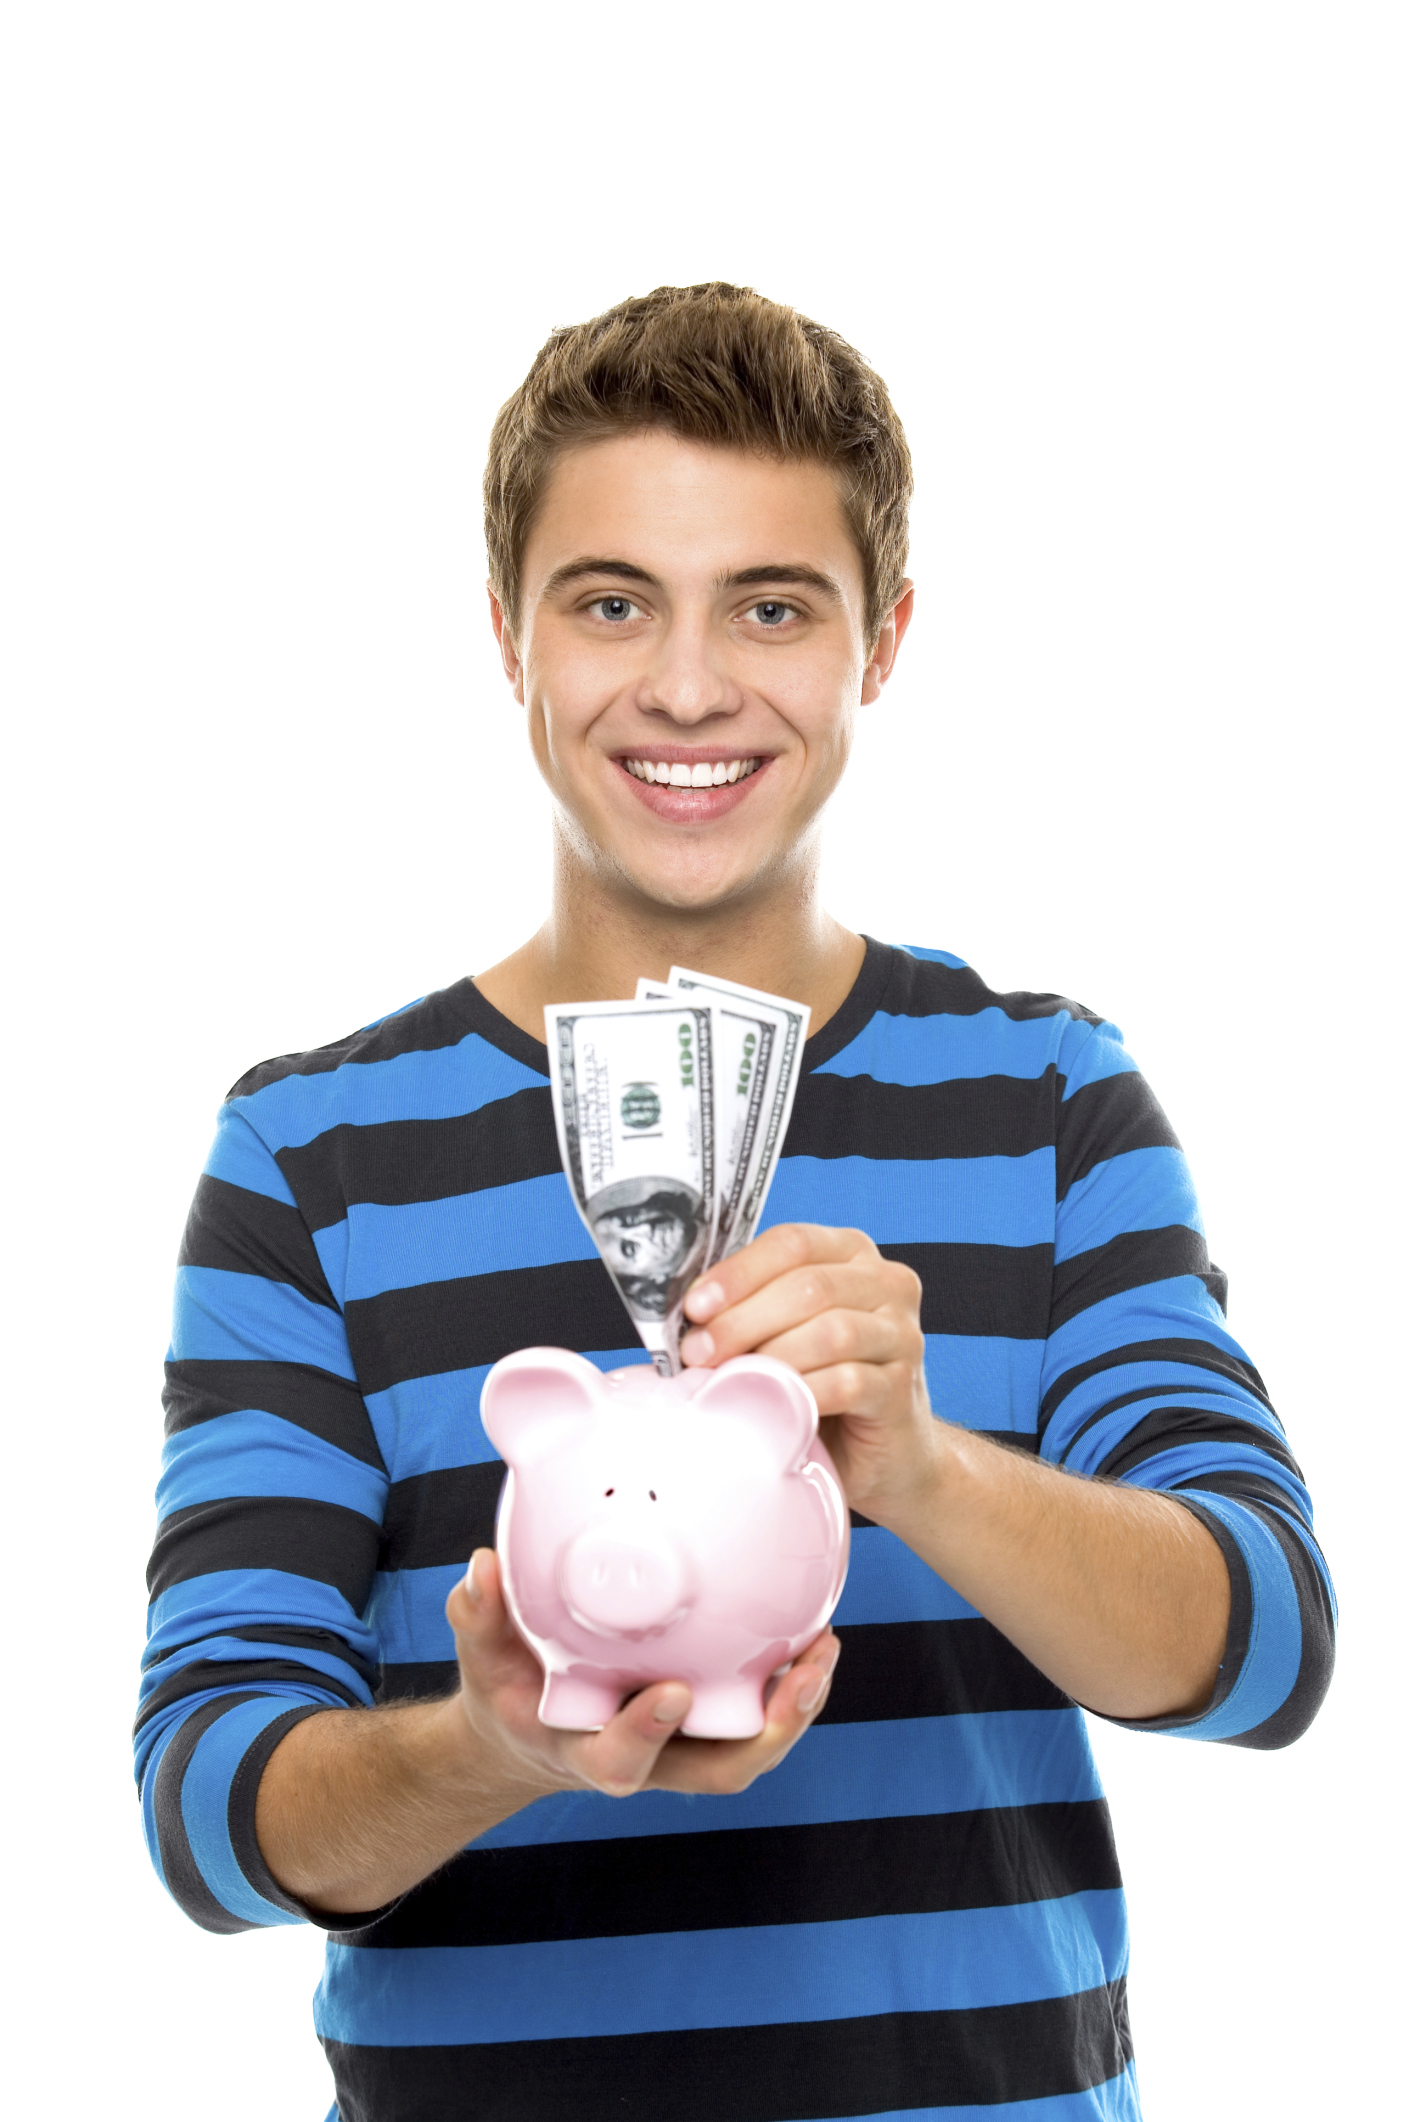 Teens demonstrating savings knowledge can win money